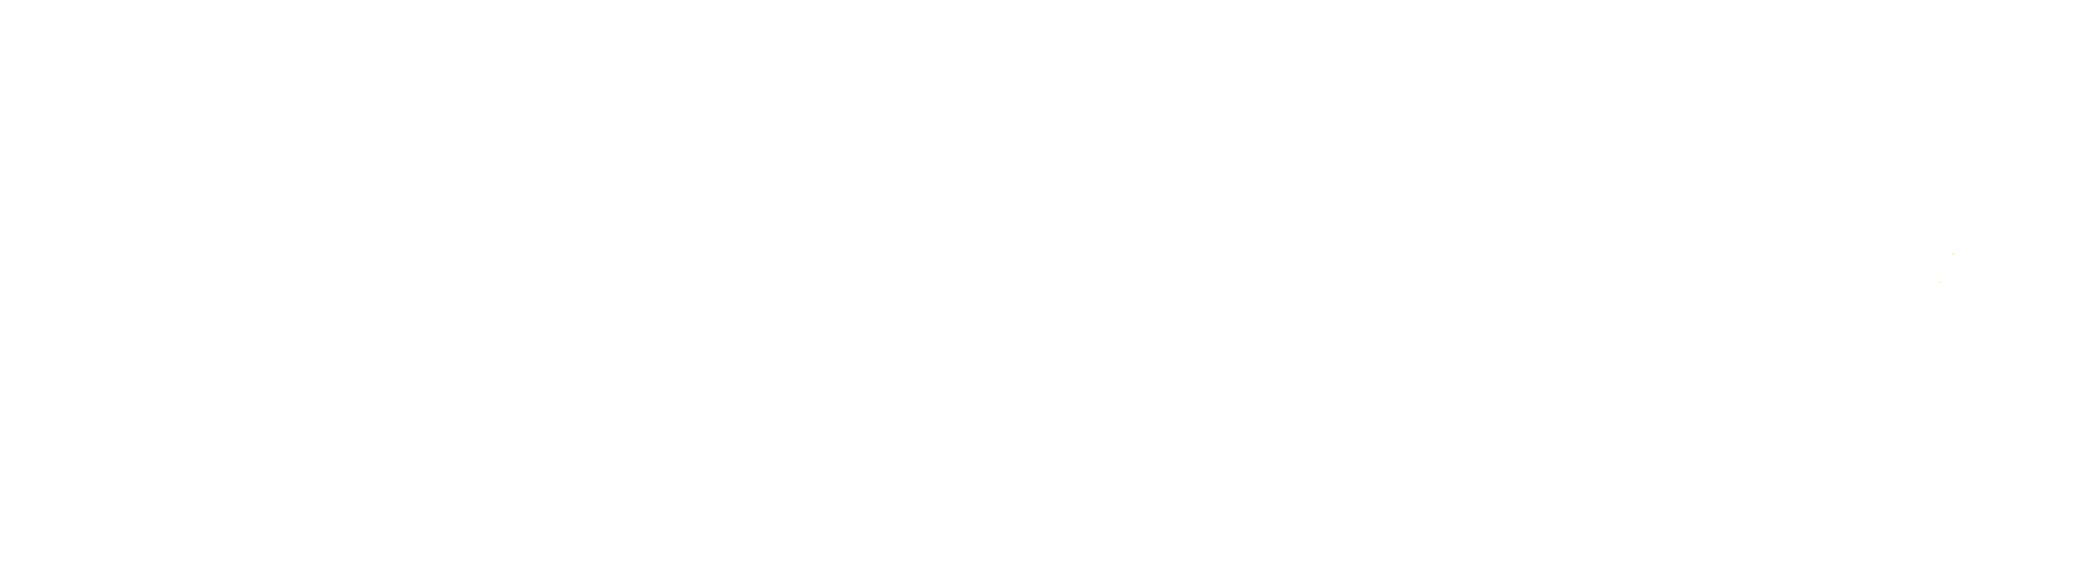 Stirling Sports logo